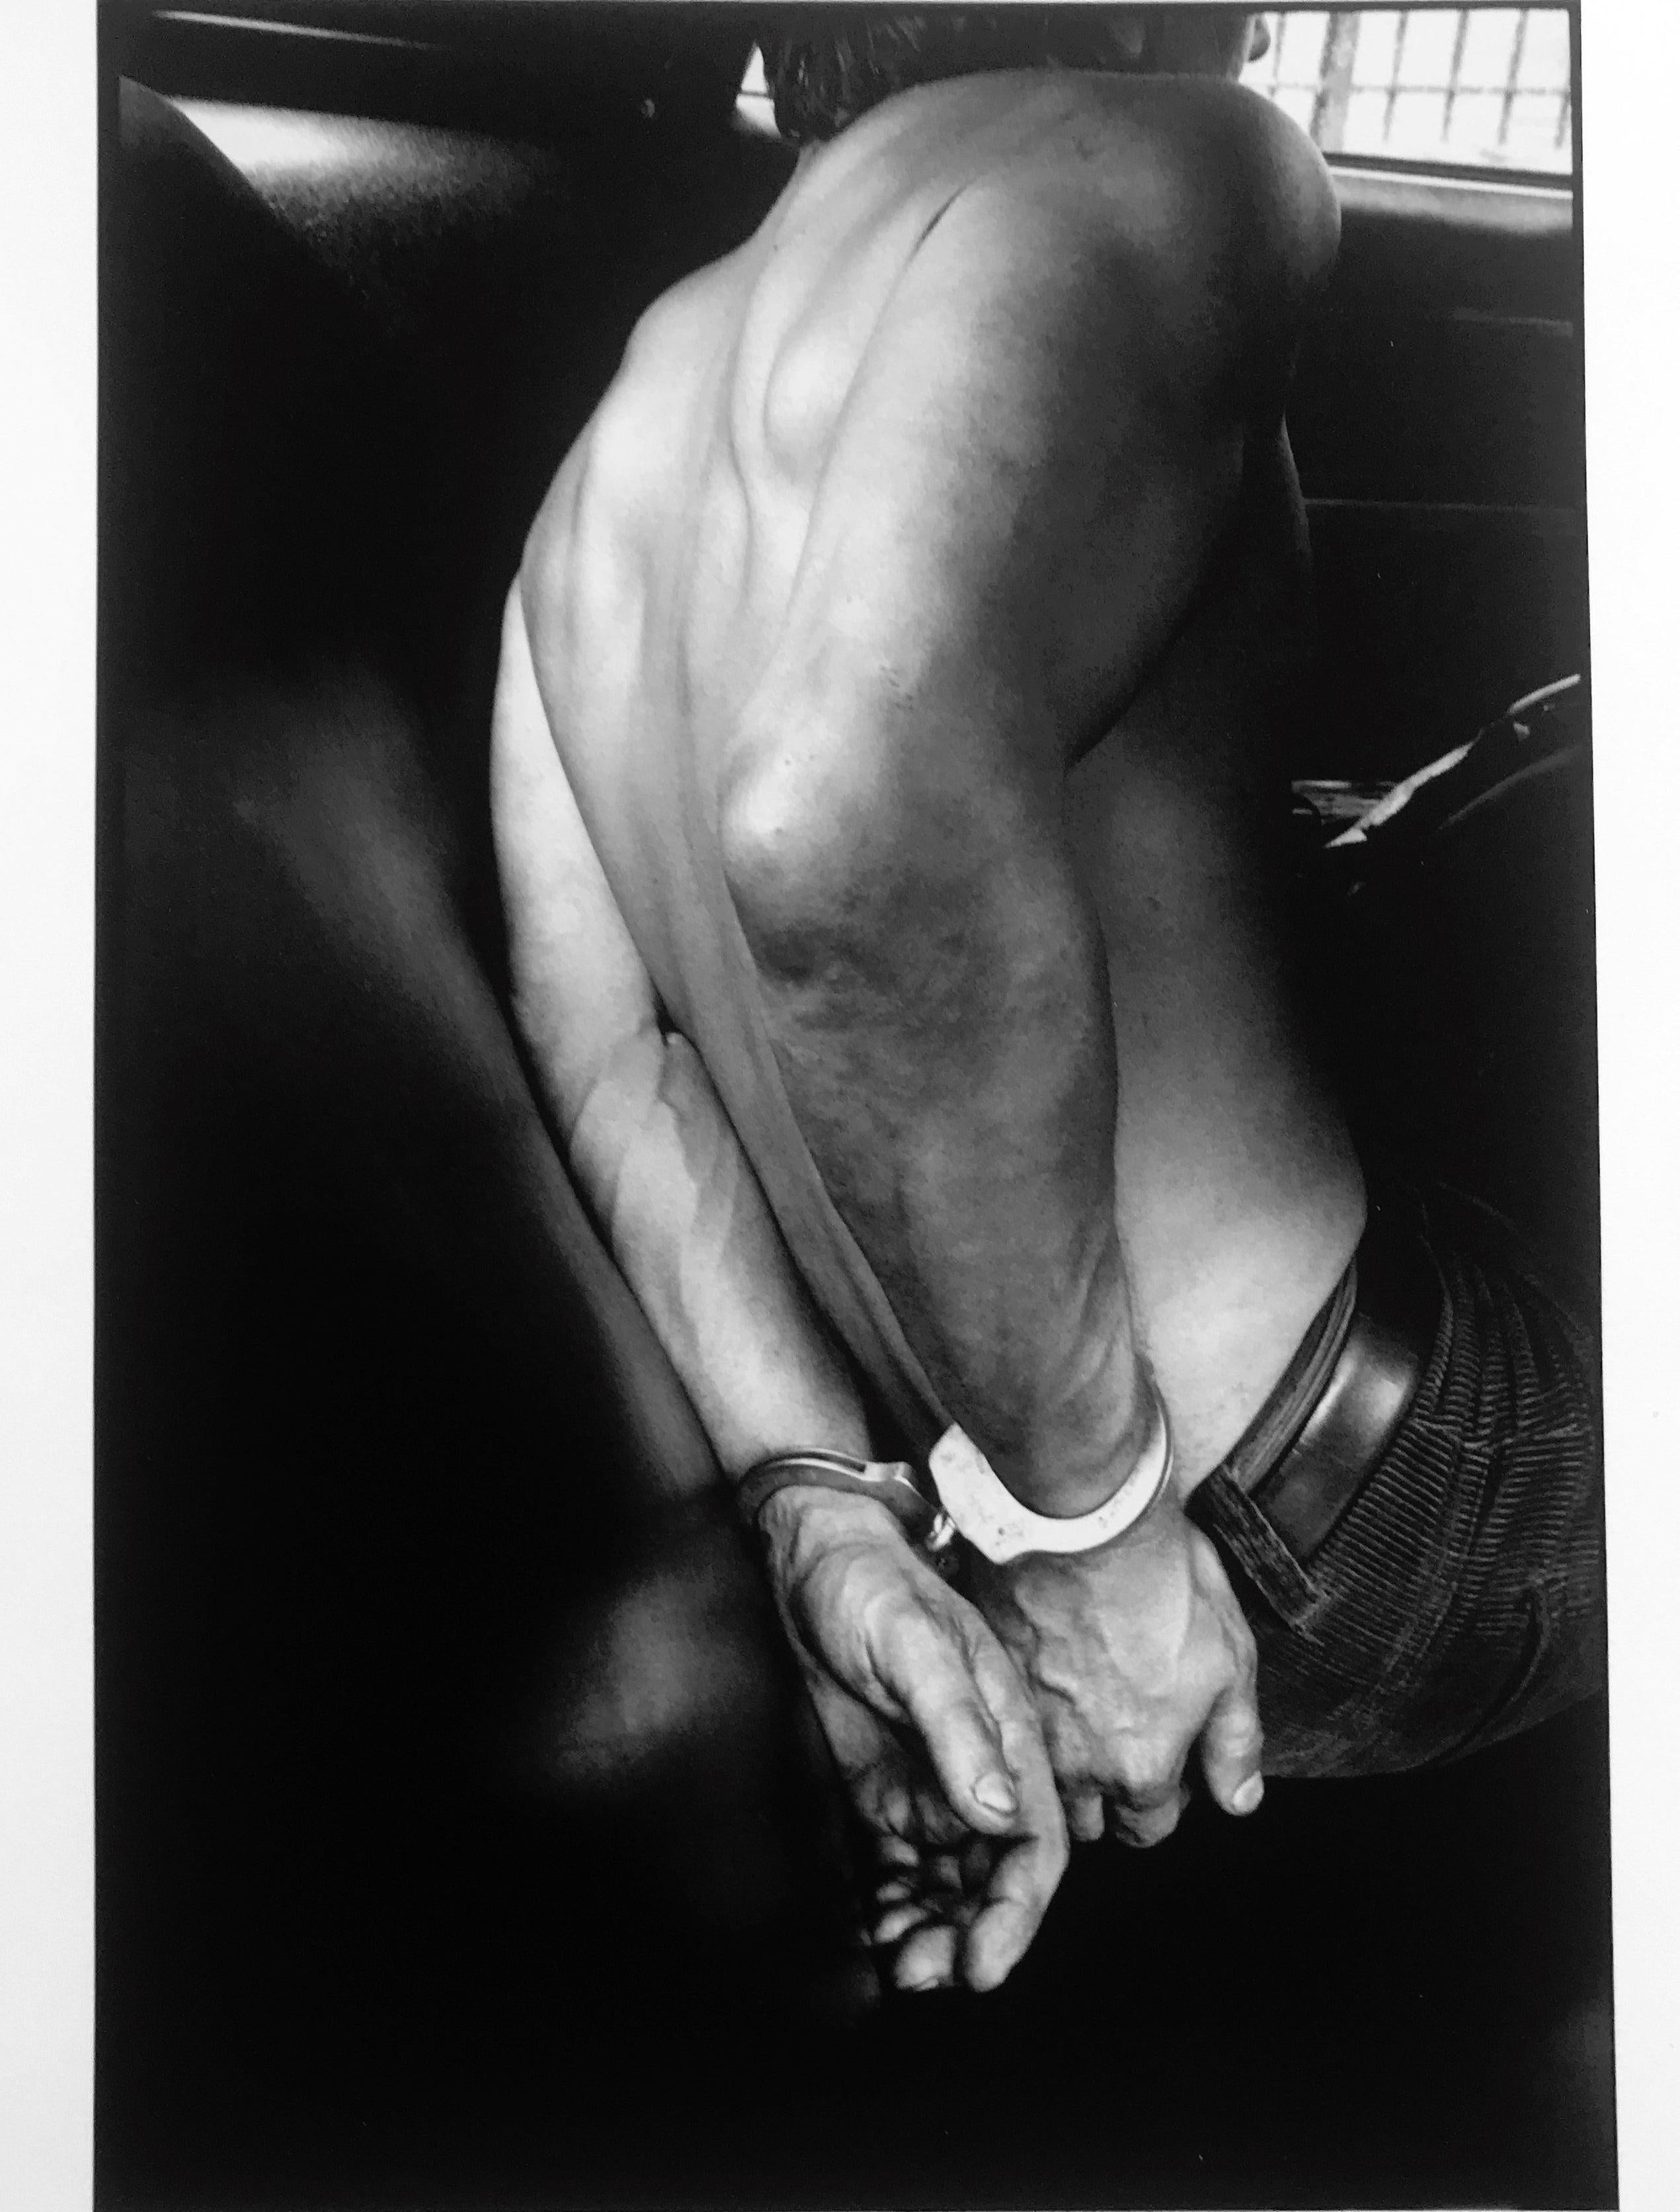 Handcuffed, New York City, Police Street Photography Series 1970s